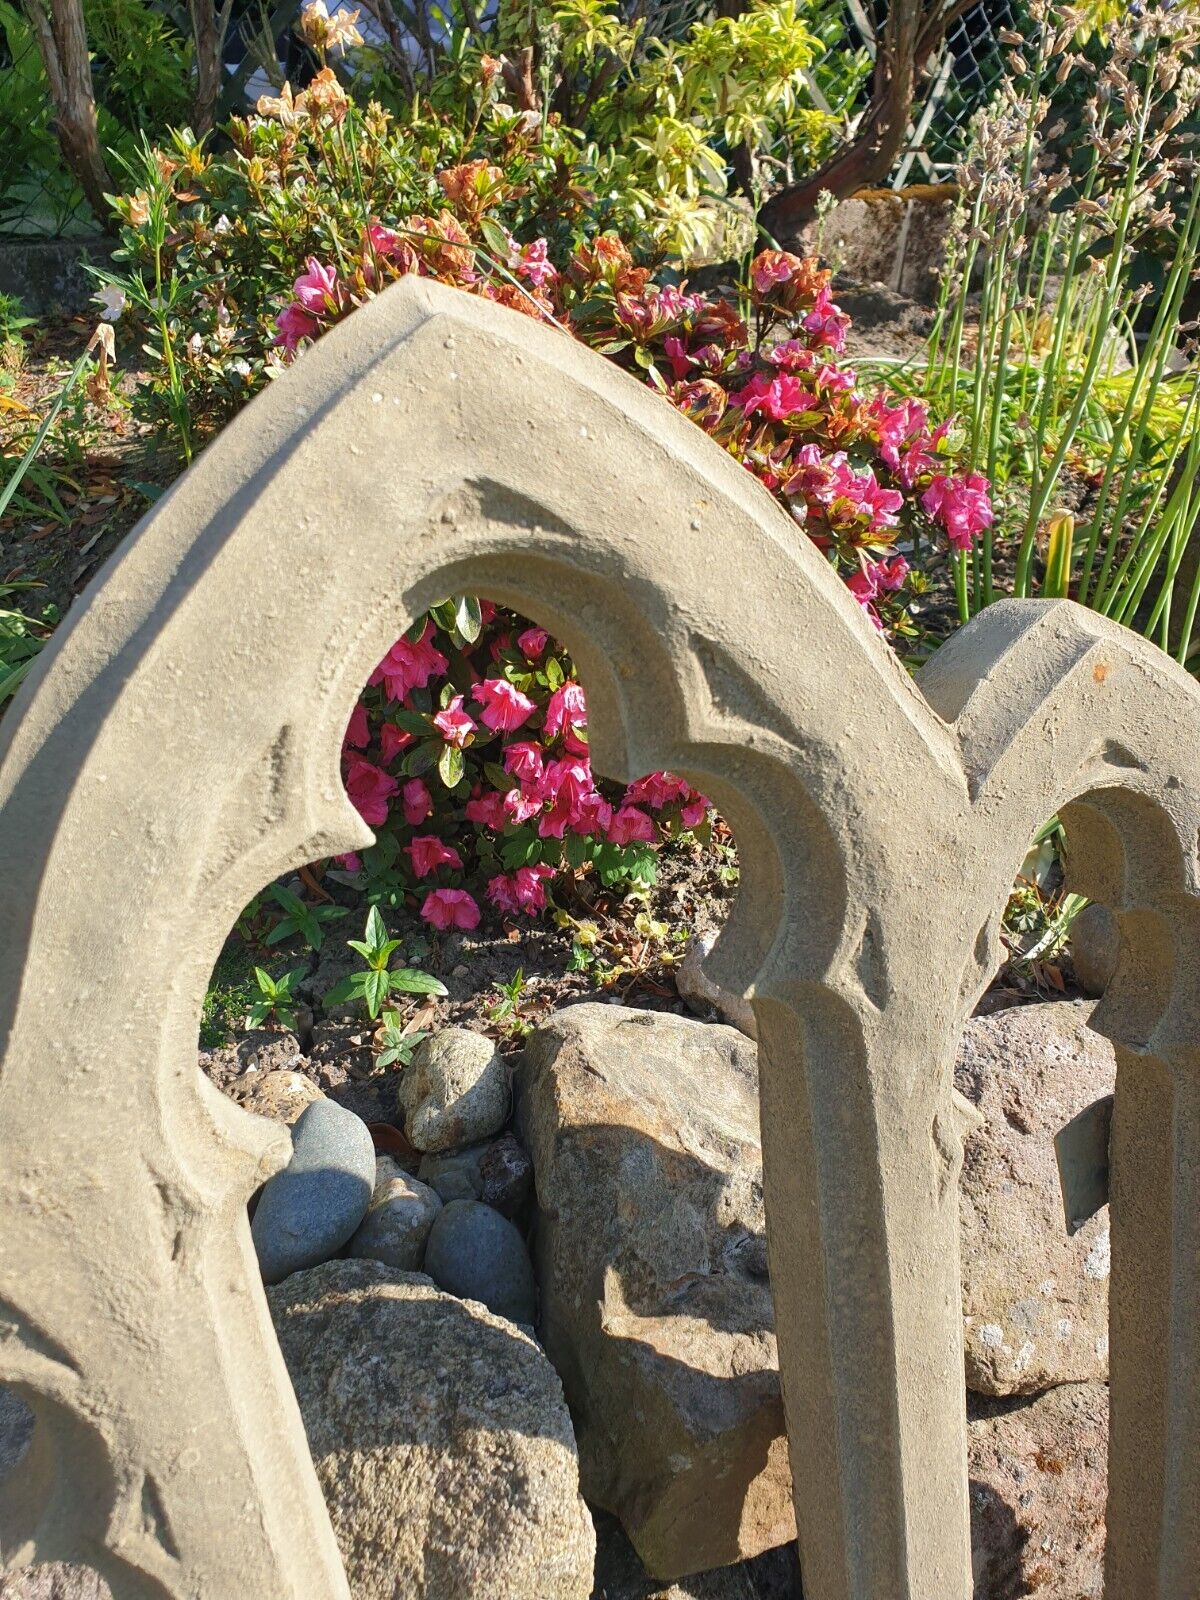 Church triple Arch window garden ornament English stone